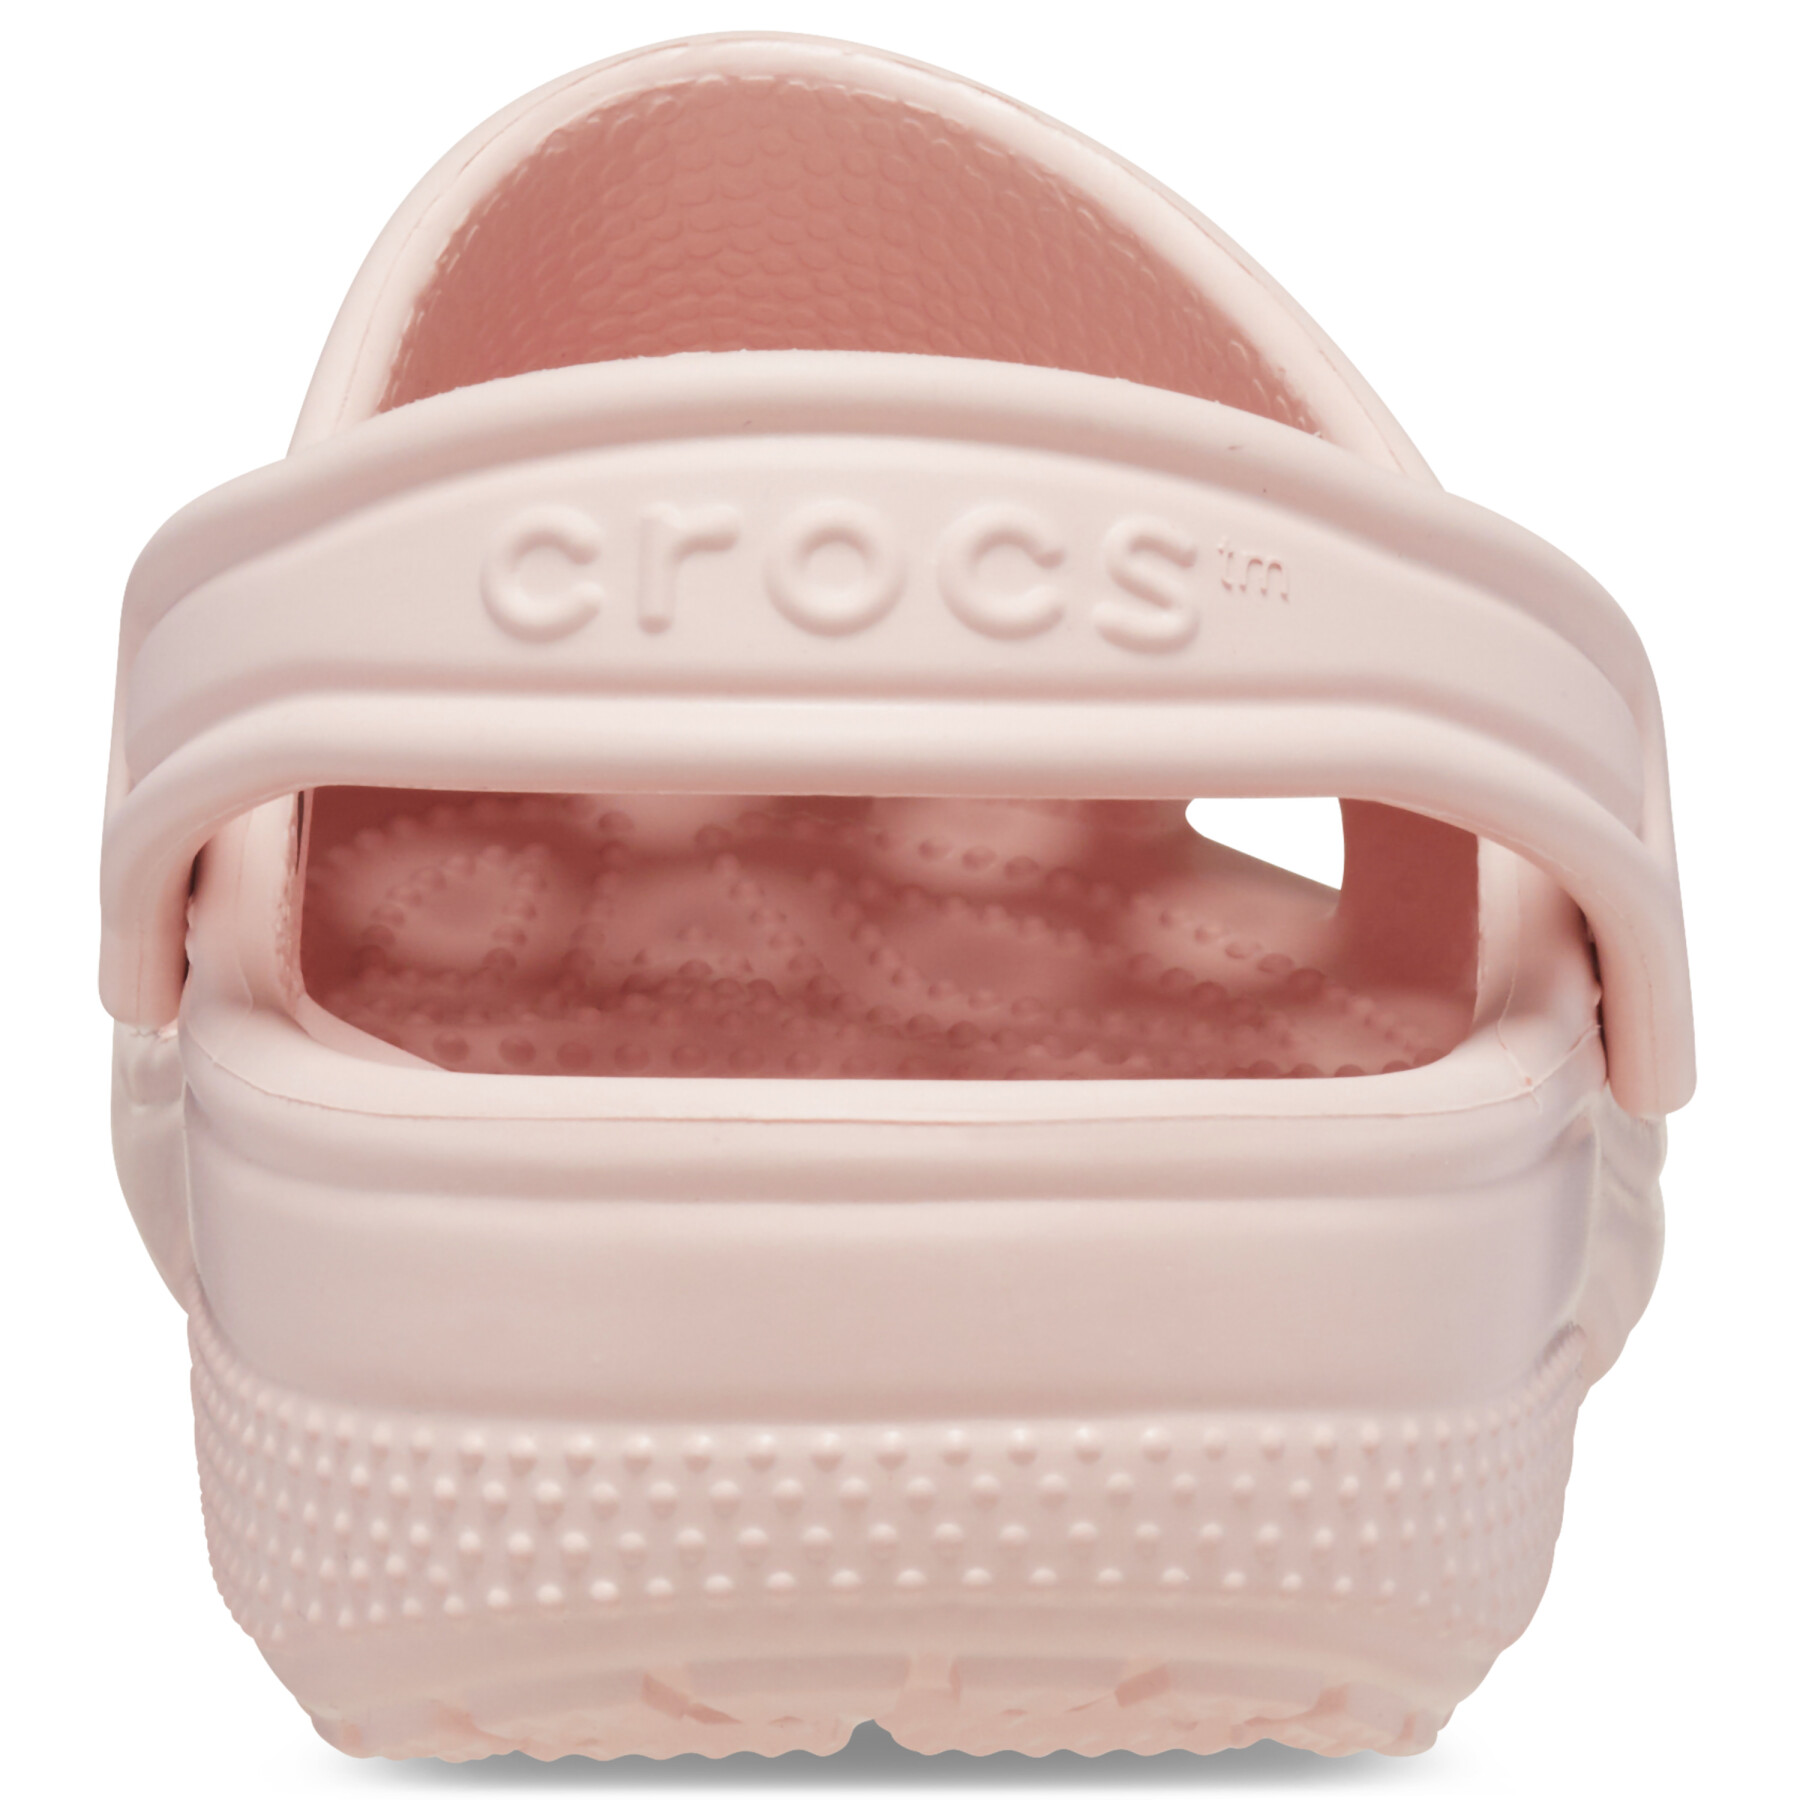 Clogs für Kinder Crocs Classic